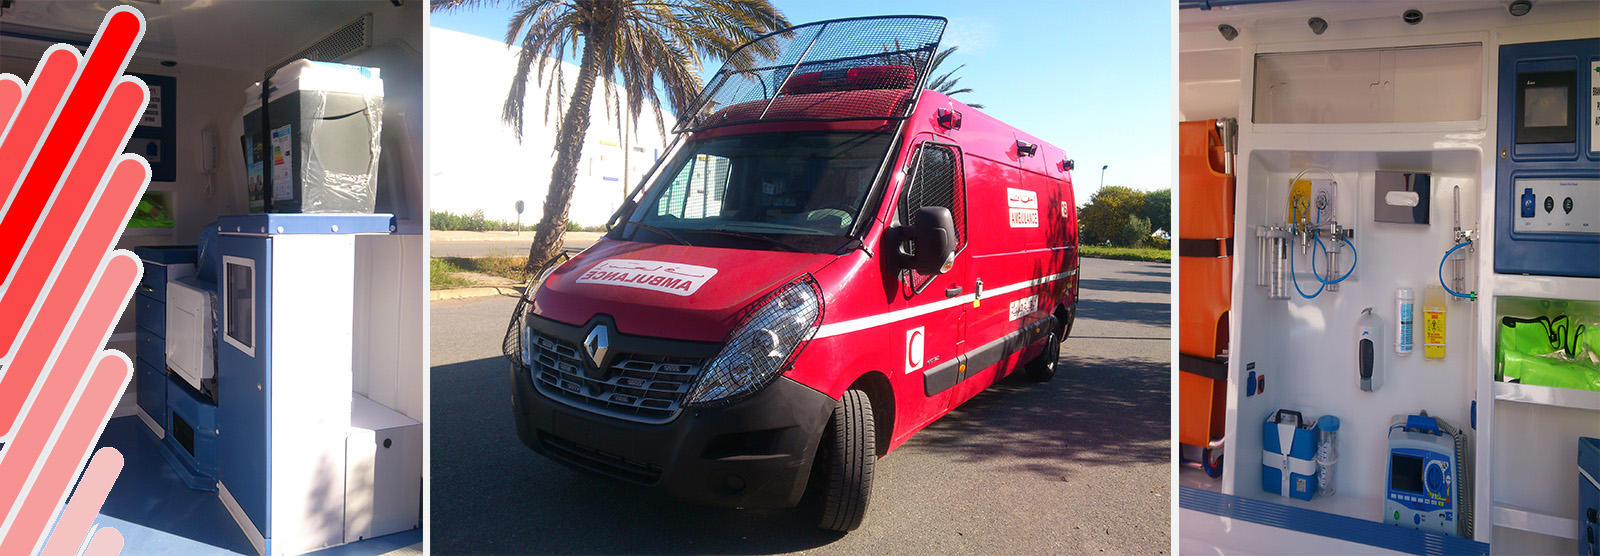 arinco - Vhicules Ambulance